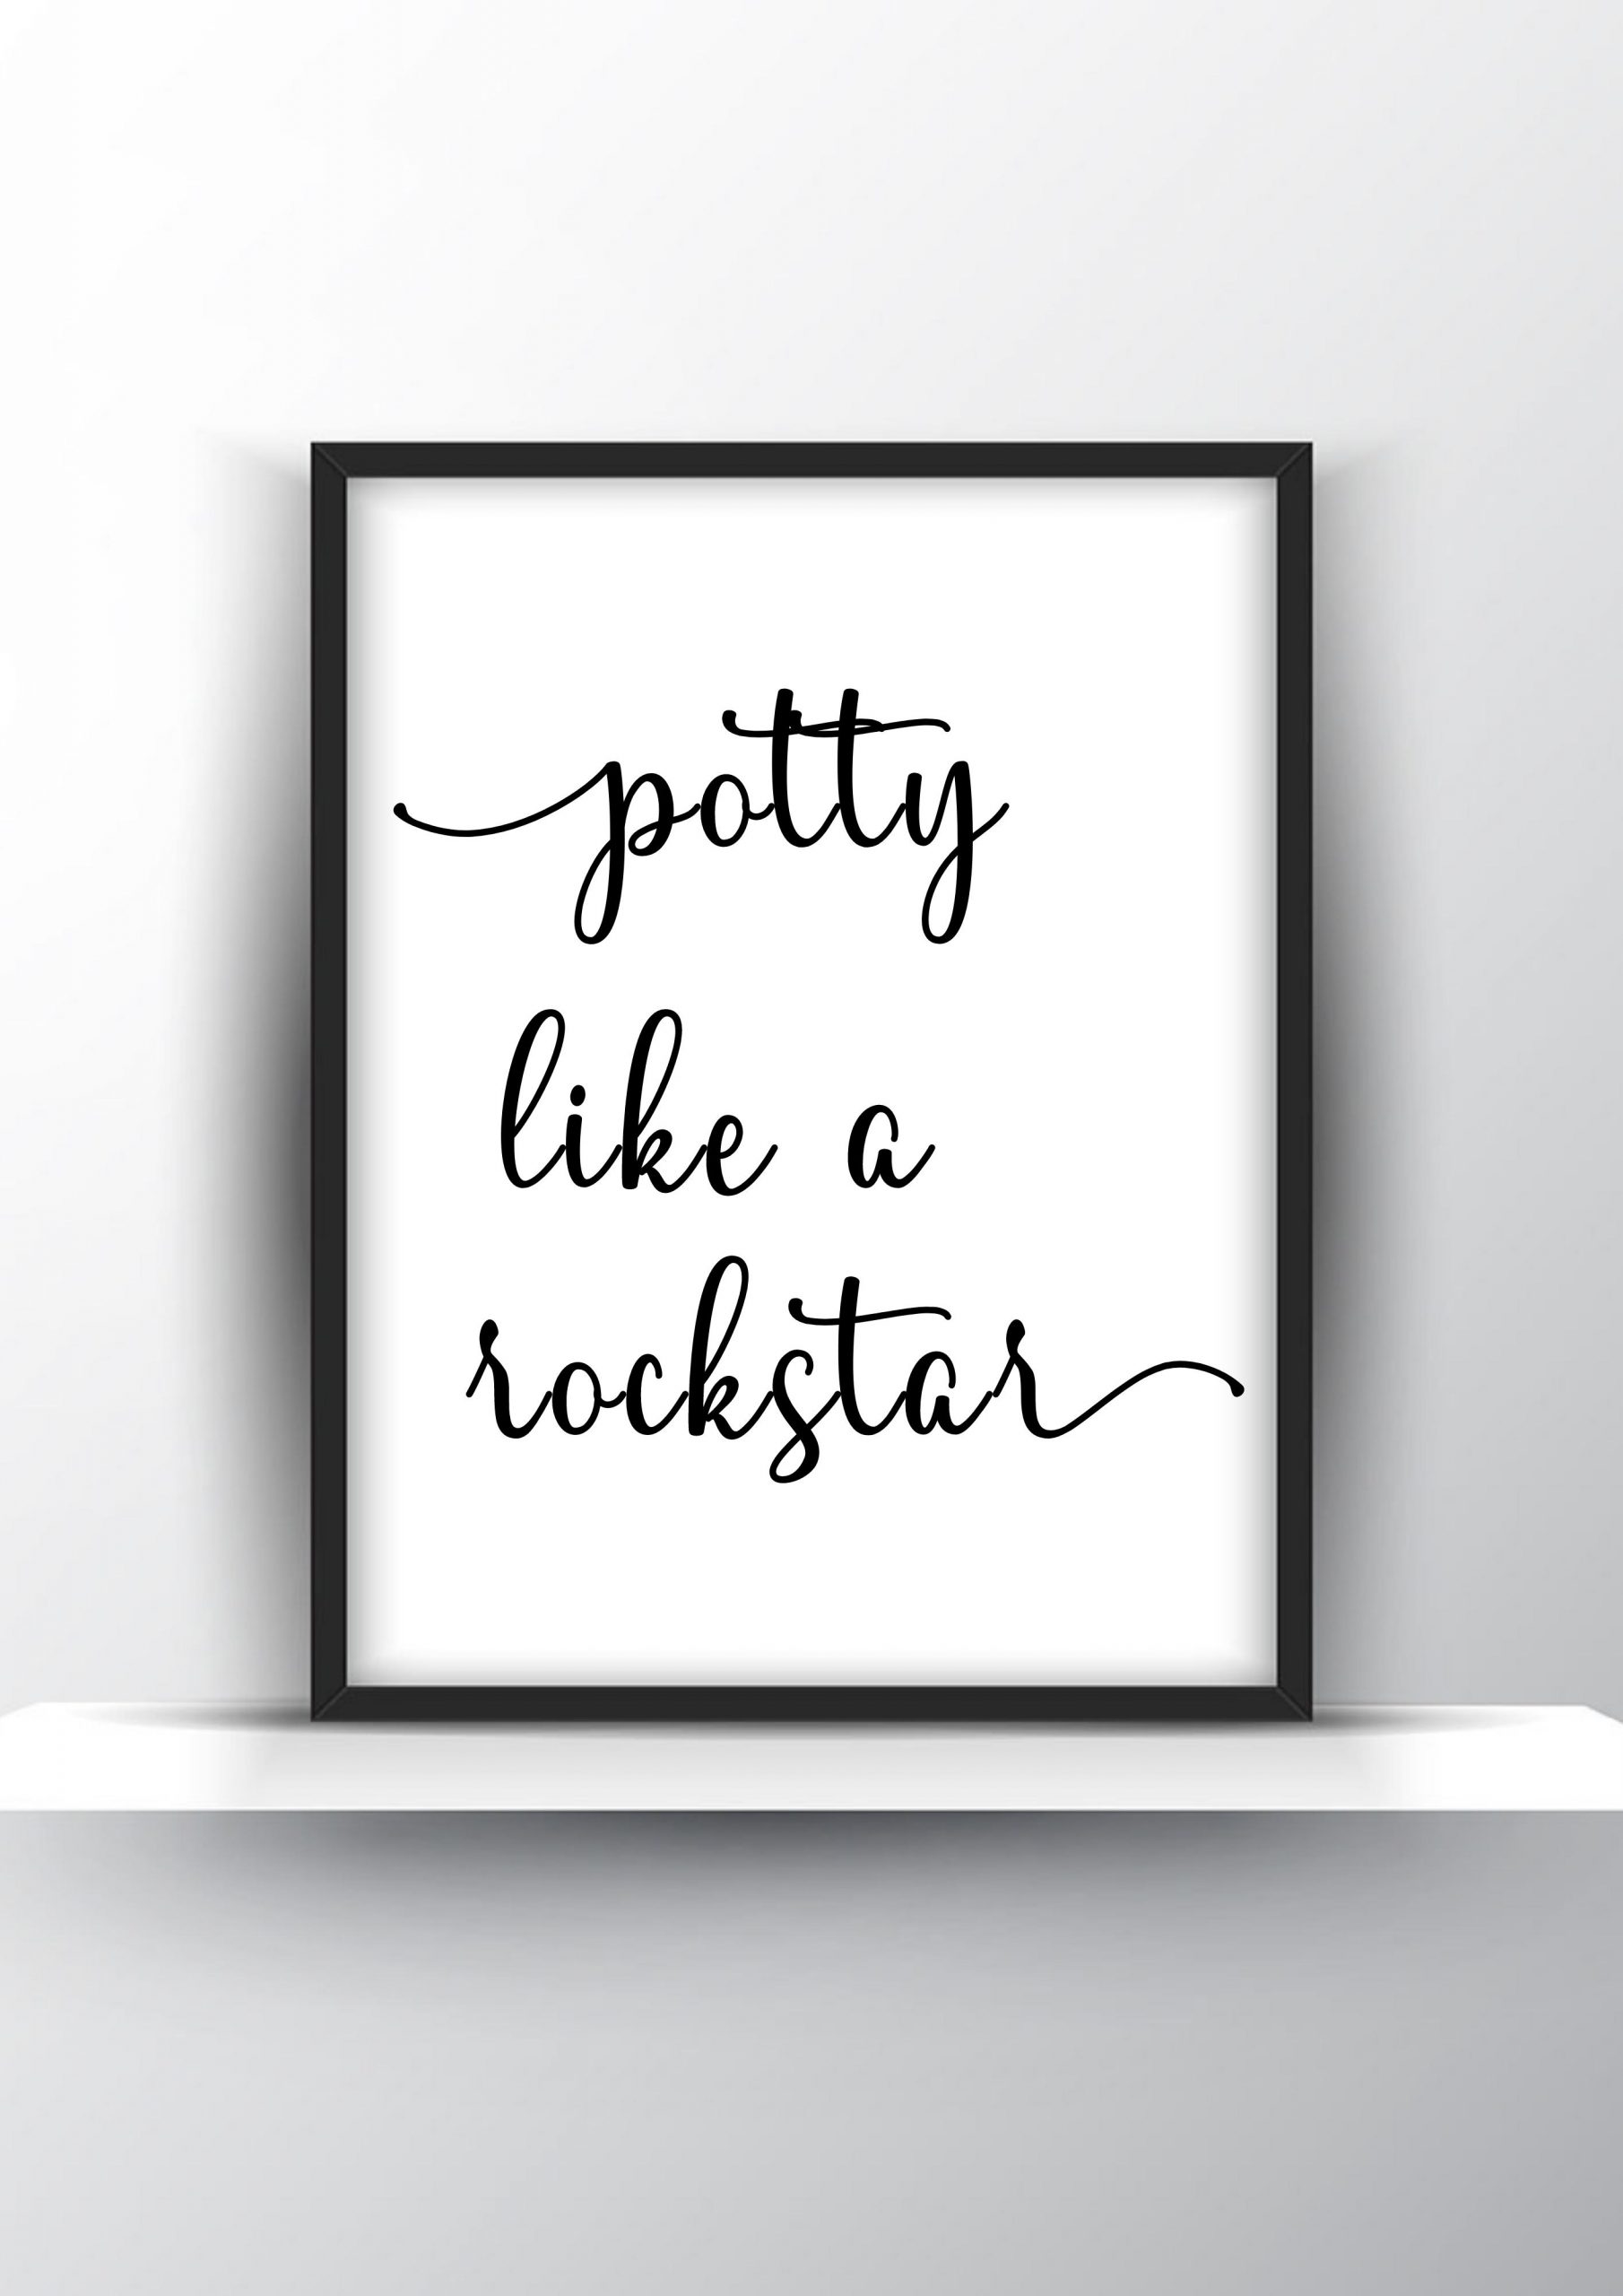 Potty like a rockstar Unframed and Framed Wall Art Poster Print